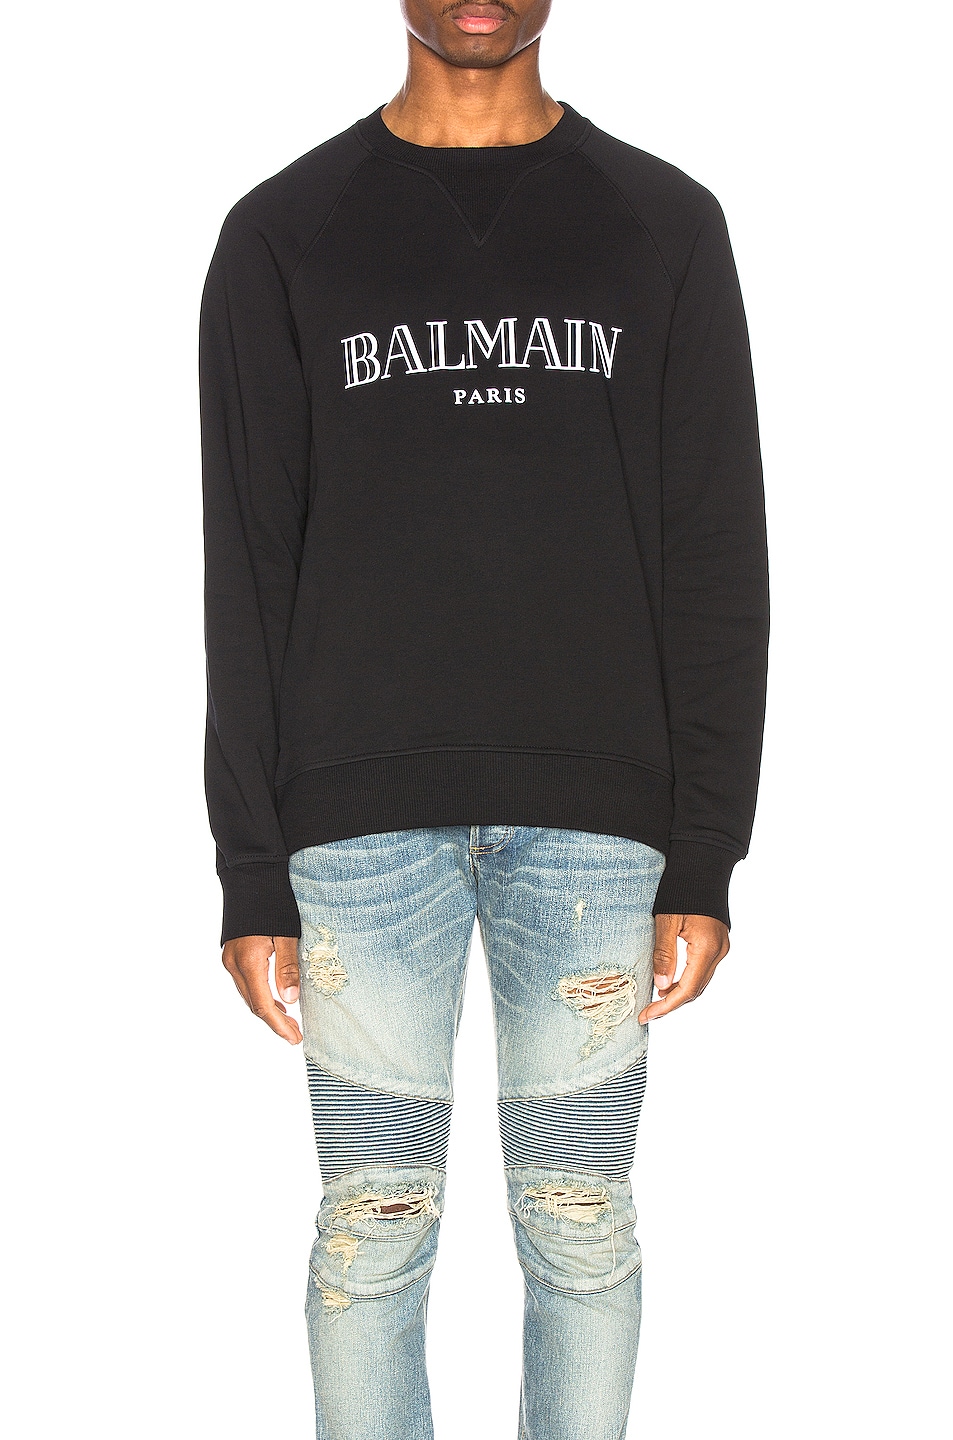 Image 1 of BALMAIN Balmain Paris Sweatshirt in Noir & Blanc